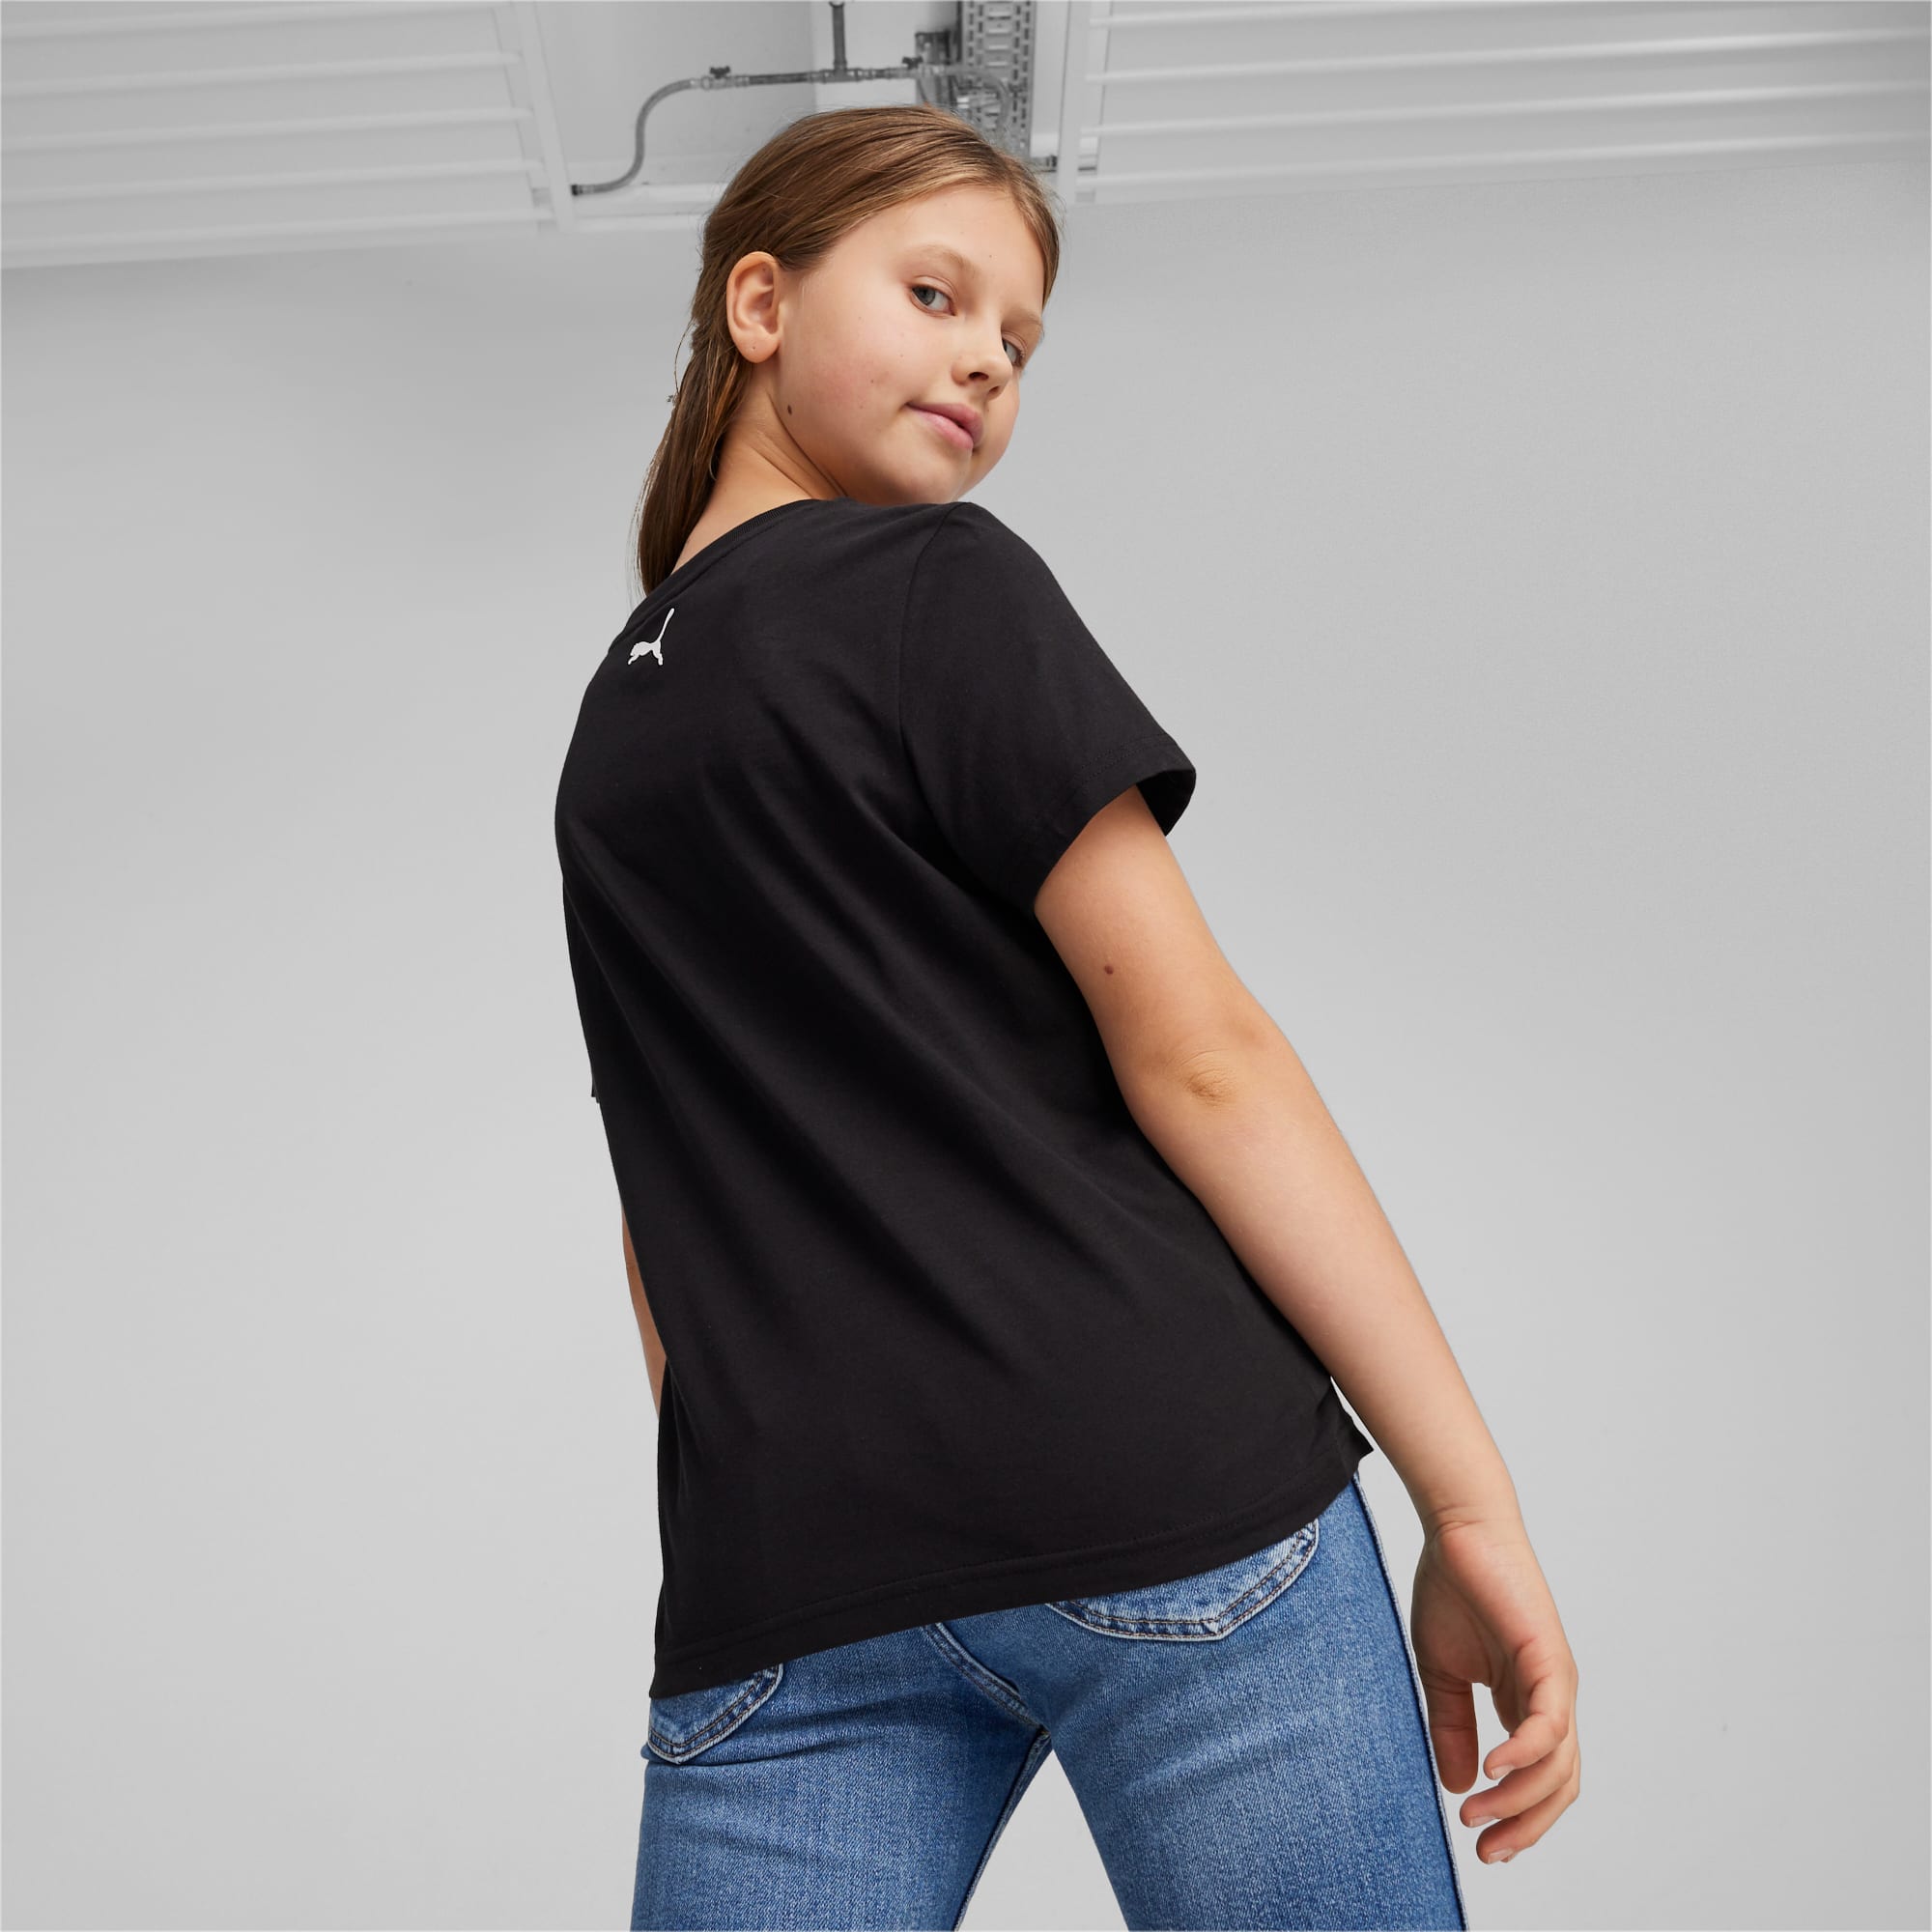 PUMA Scuderia Ferrari Race Youth Motorsport Graphic T-Shirt, Black, Size 116, Clothing